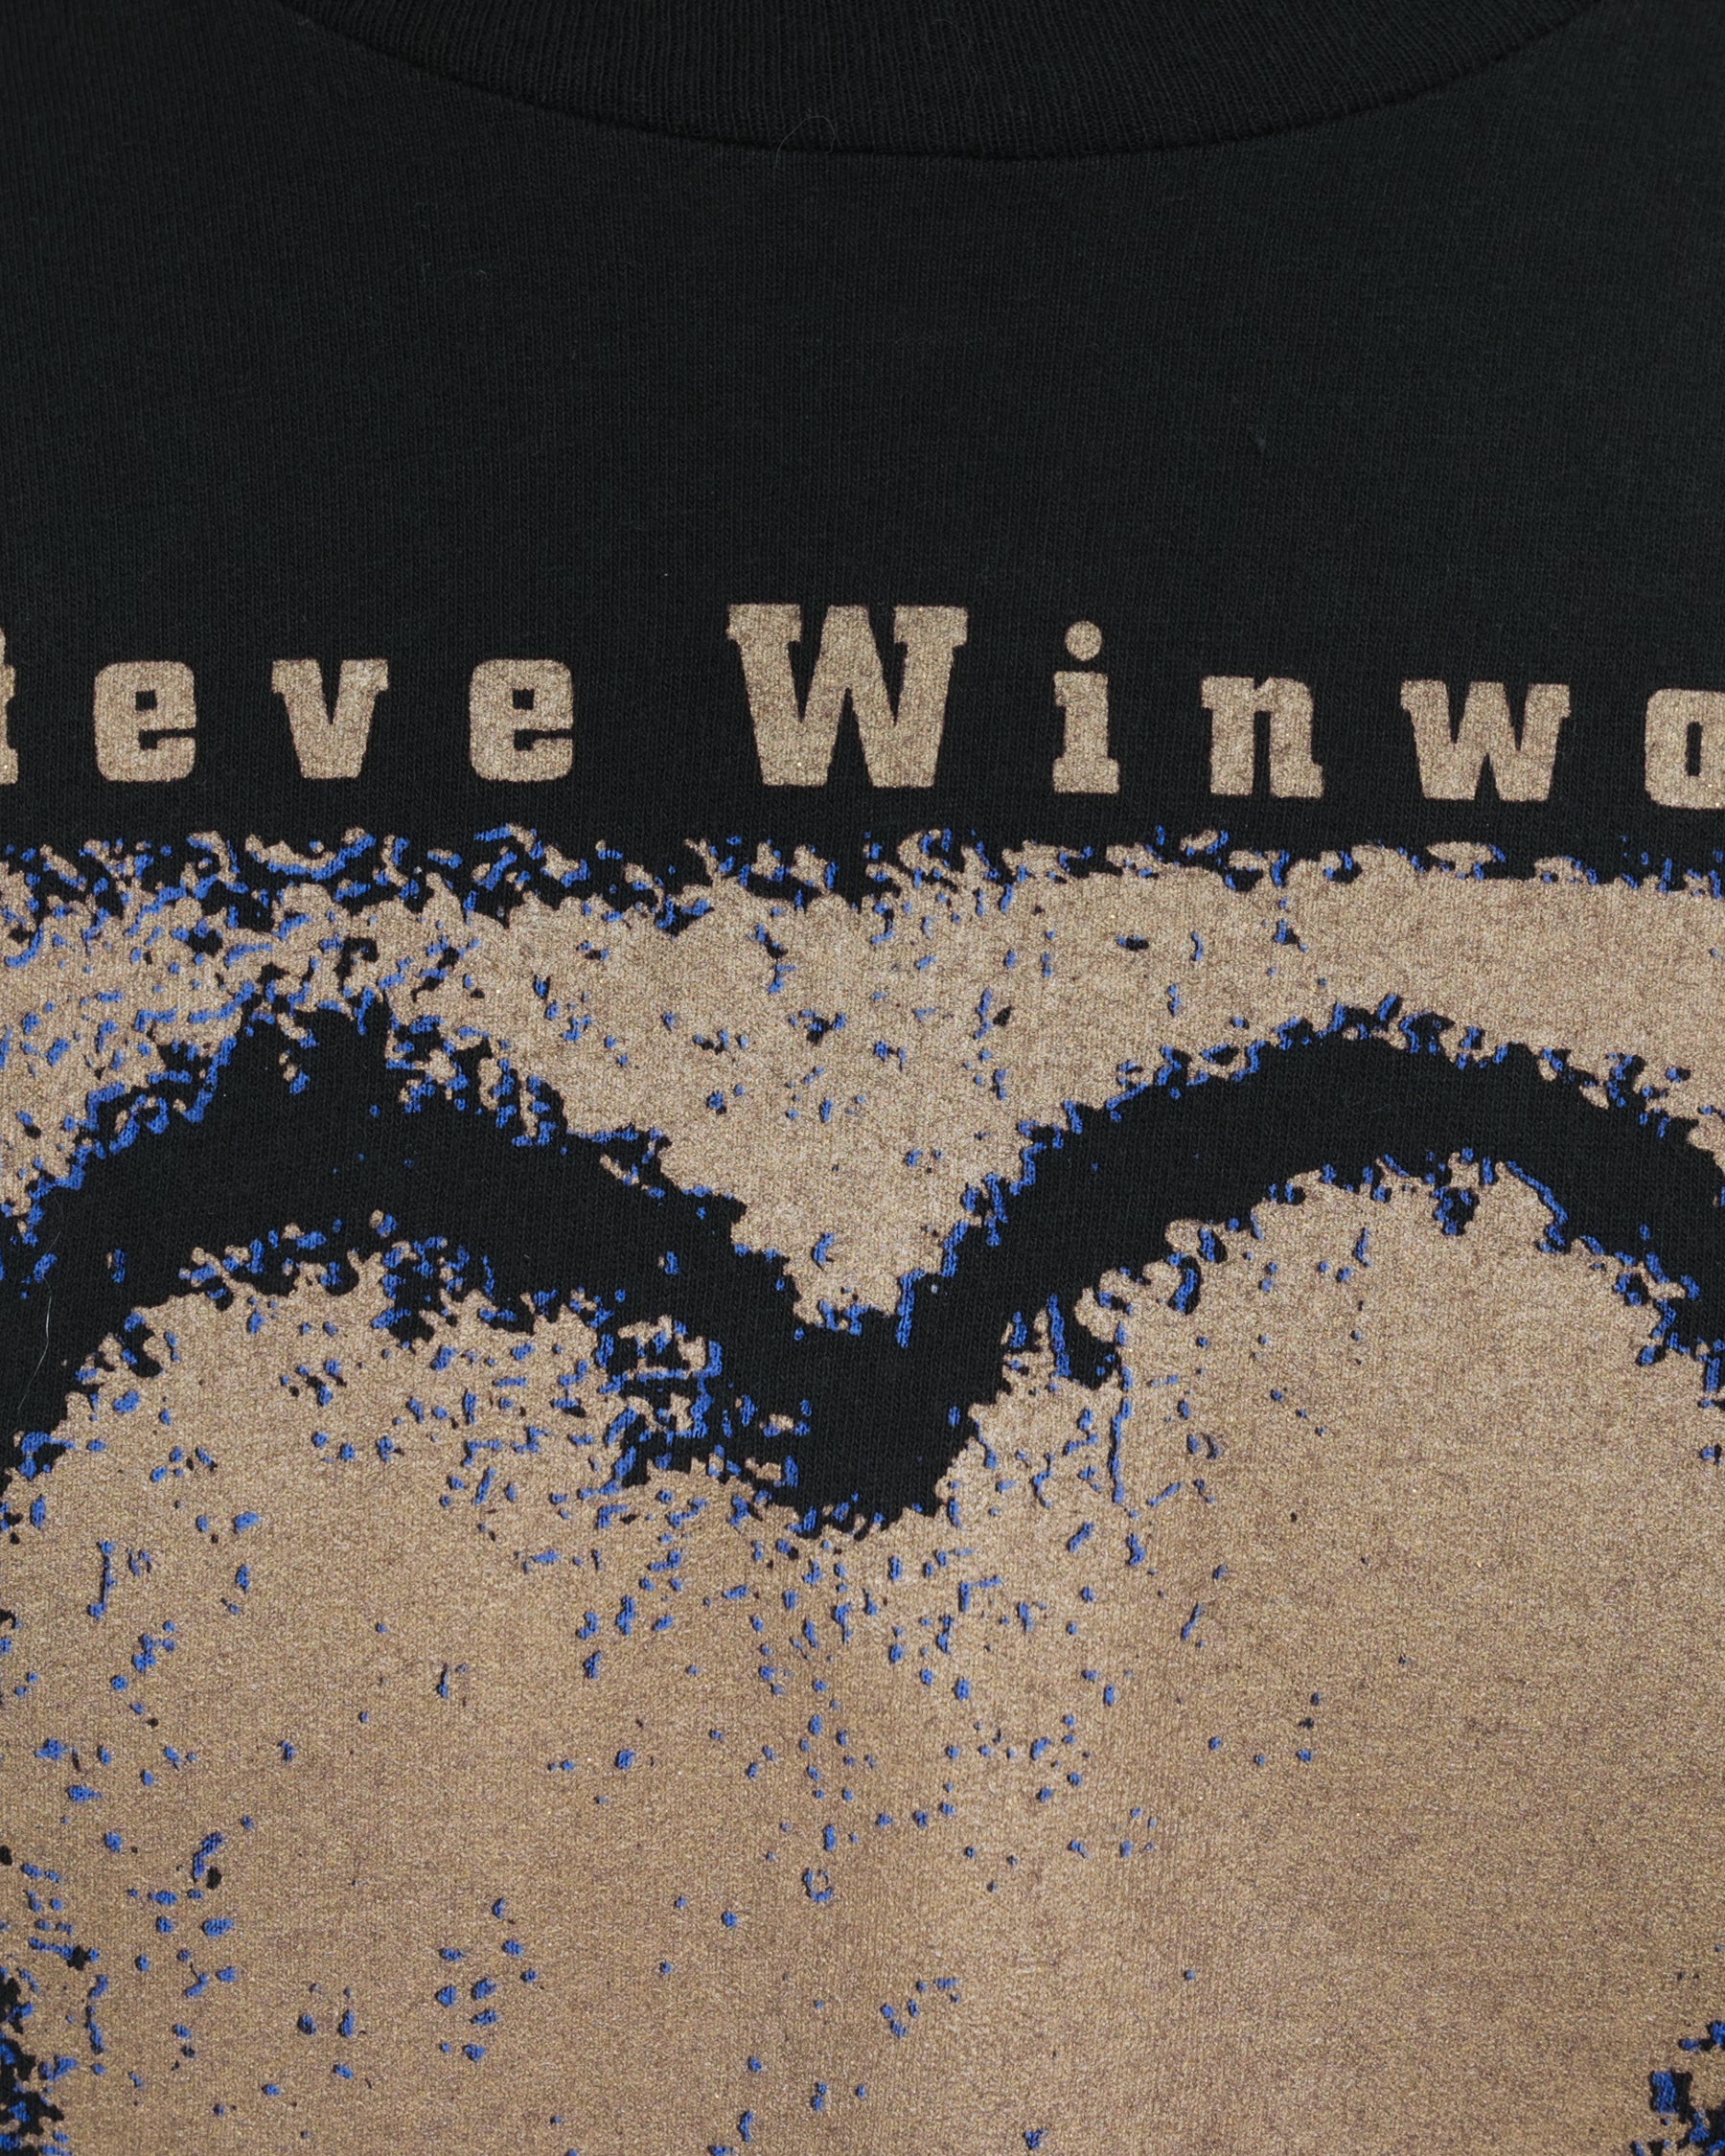 Steve Winwood Printed T-shirt